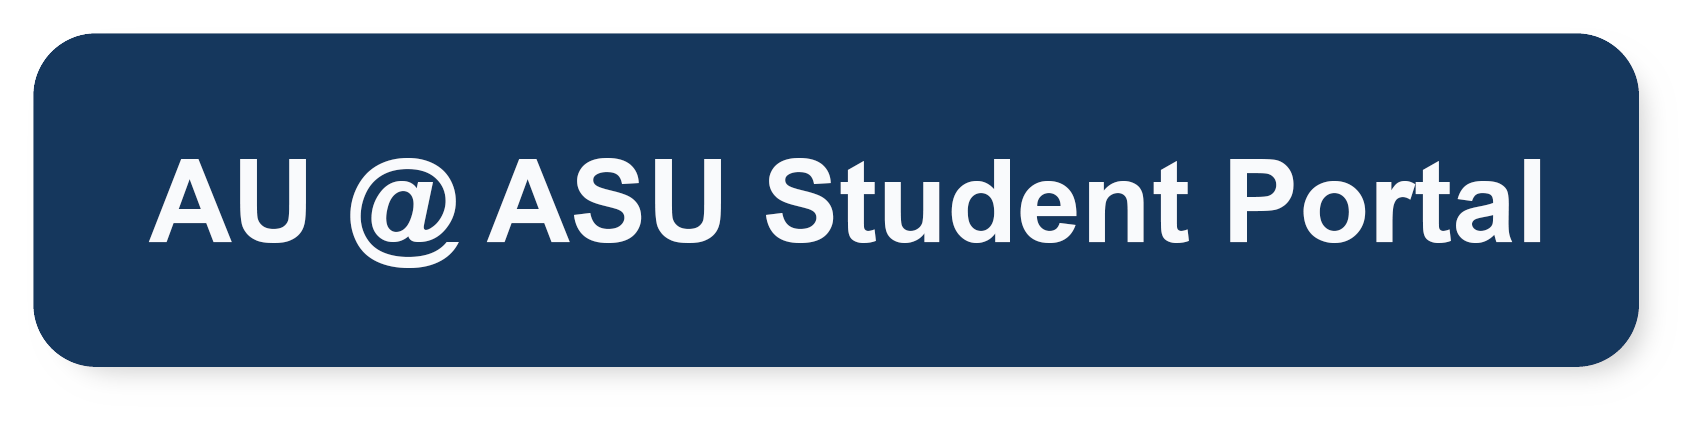 AU @ ASU Student Portal